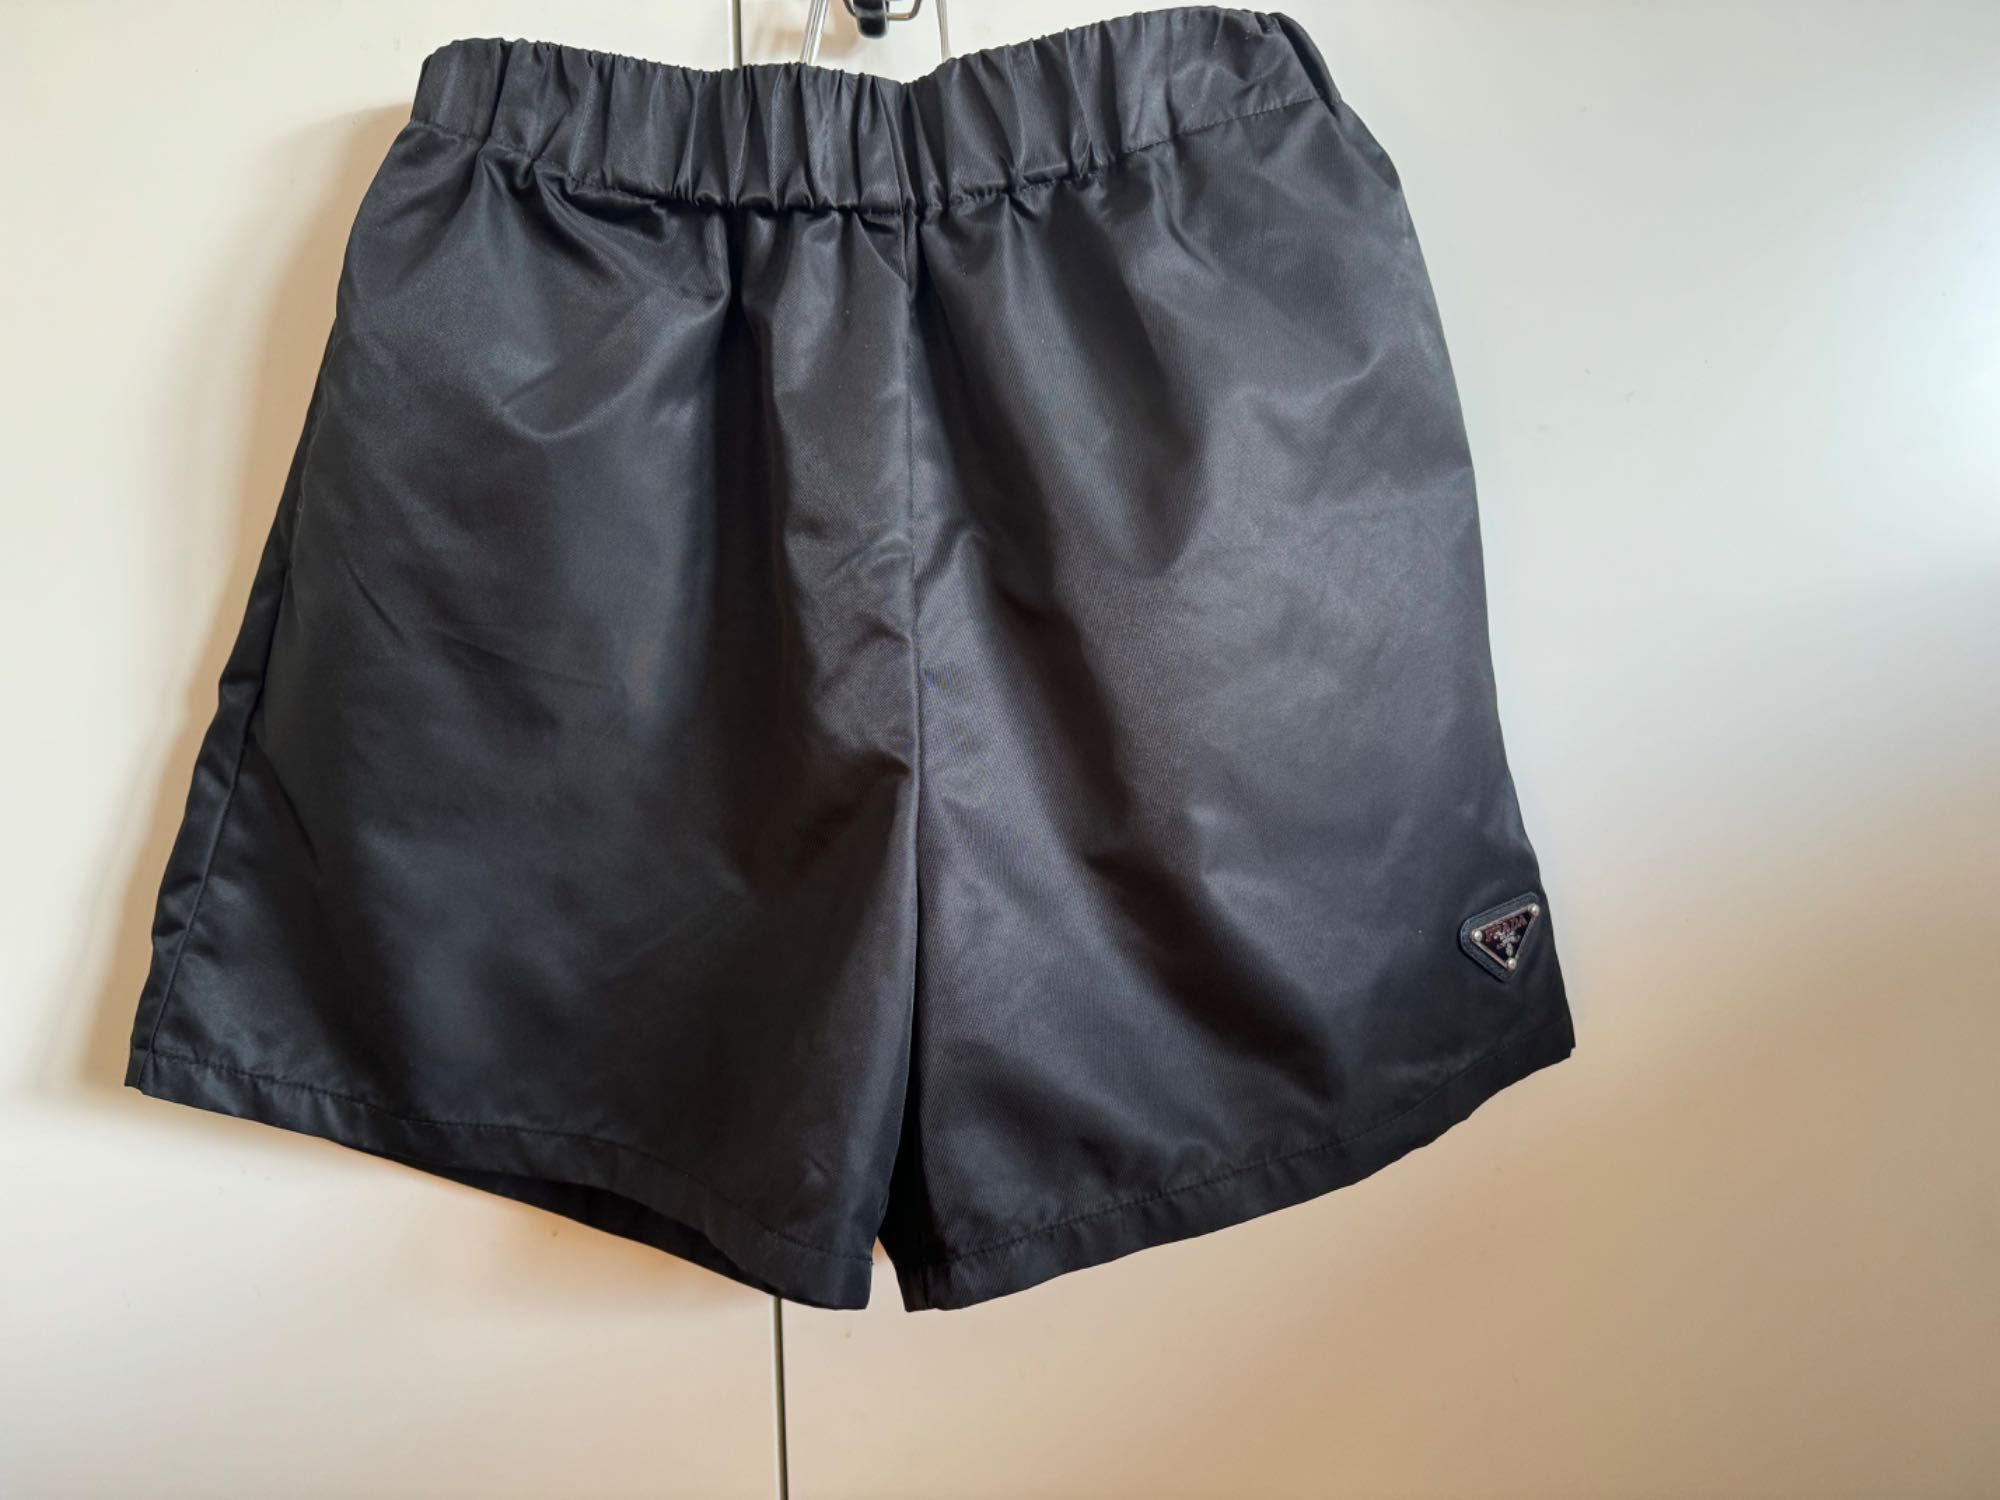 Prada shorts size 38